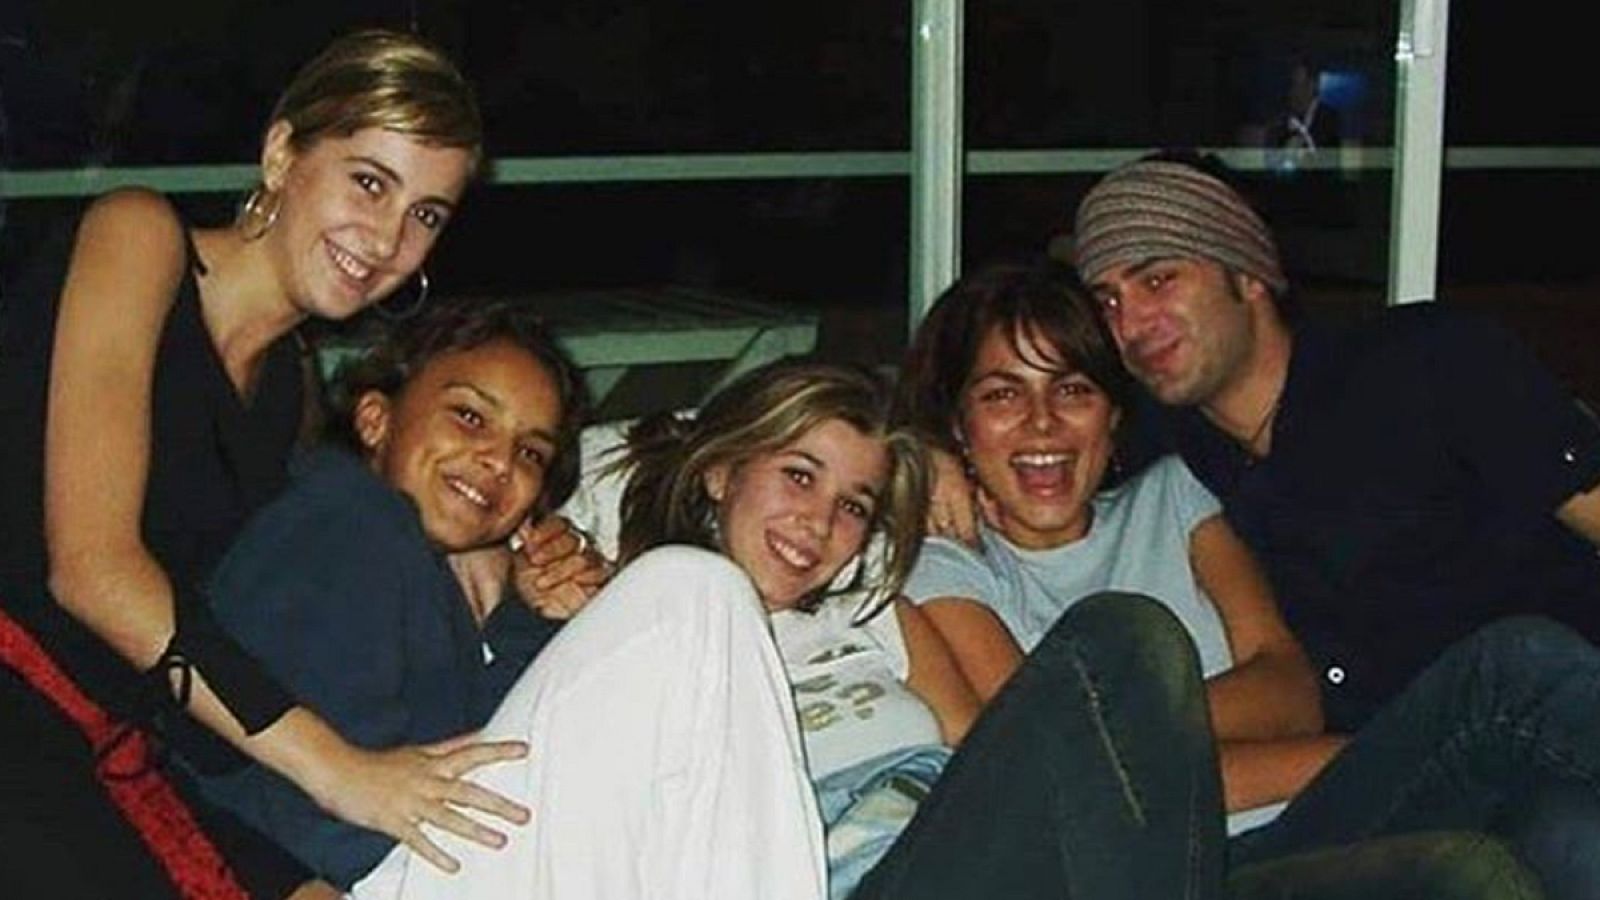 Mireia, Chenoa, Natalia, Geno y Alejandro Parreño, concursantes de OT 1. Imagen de 2002/2003